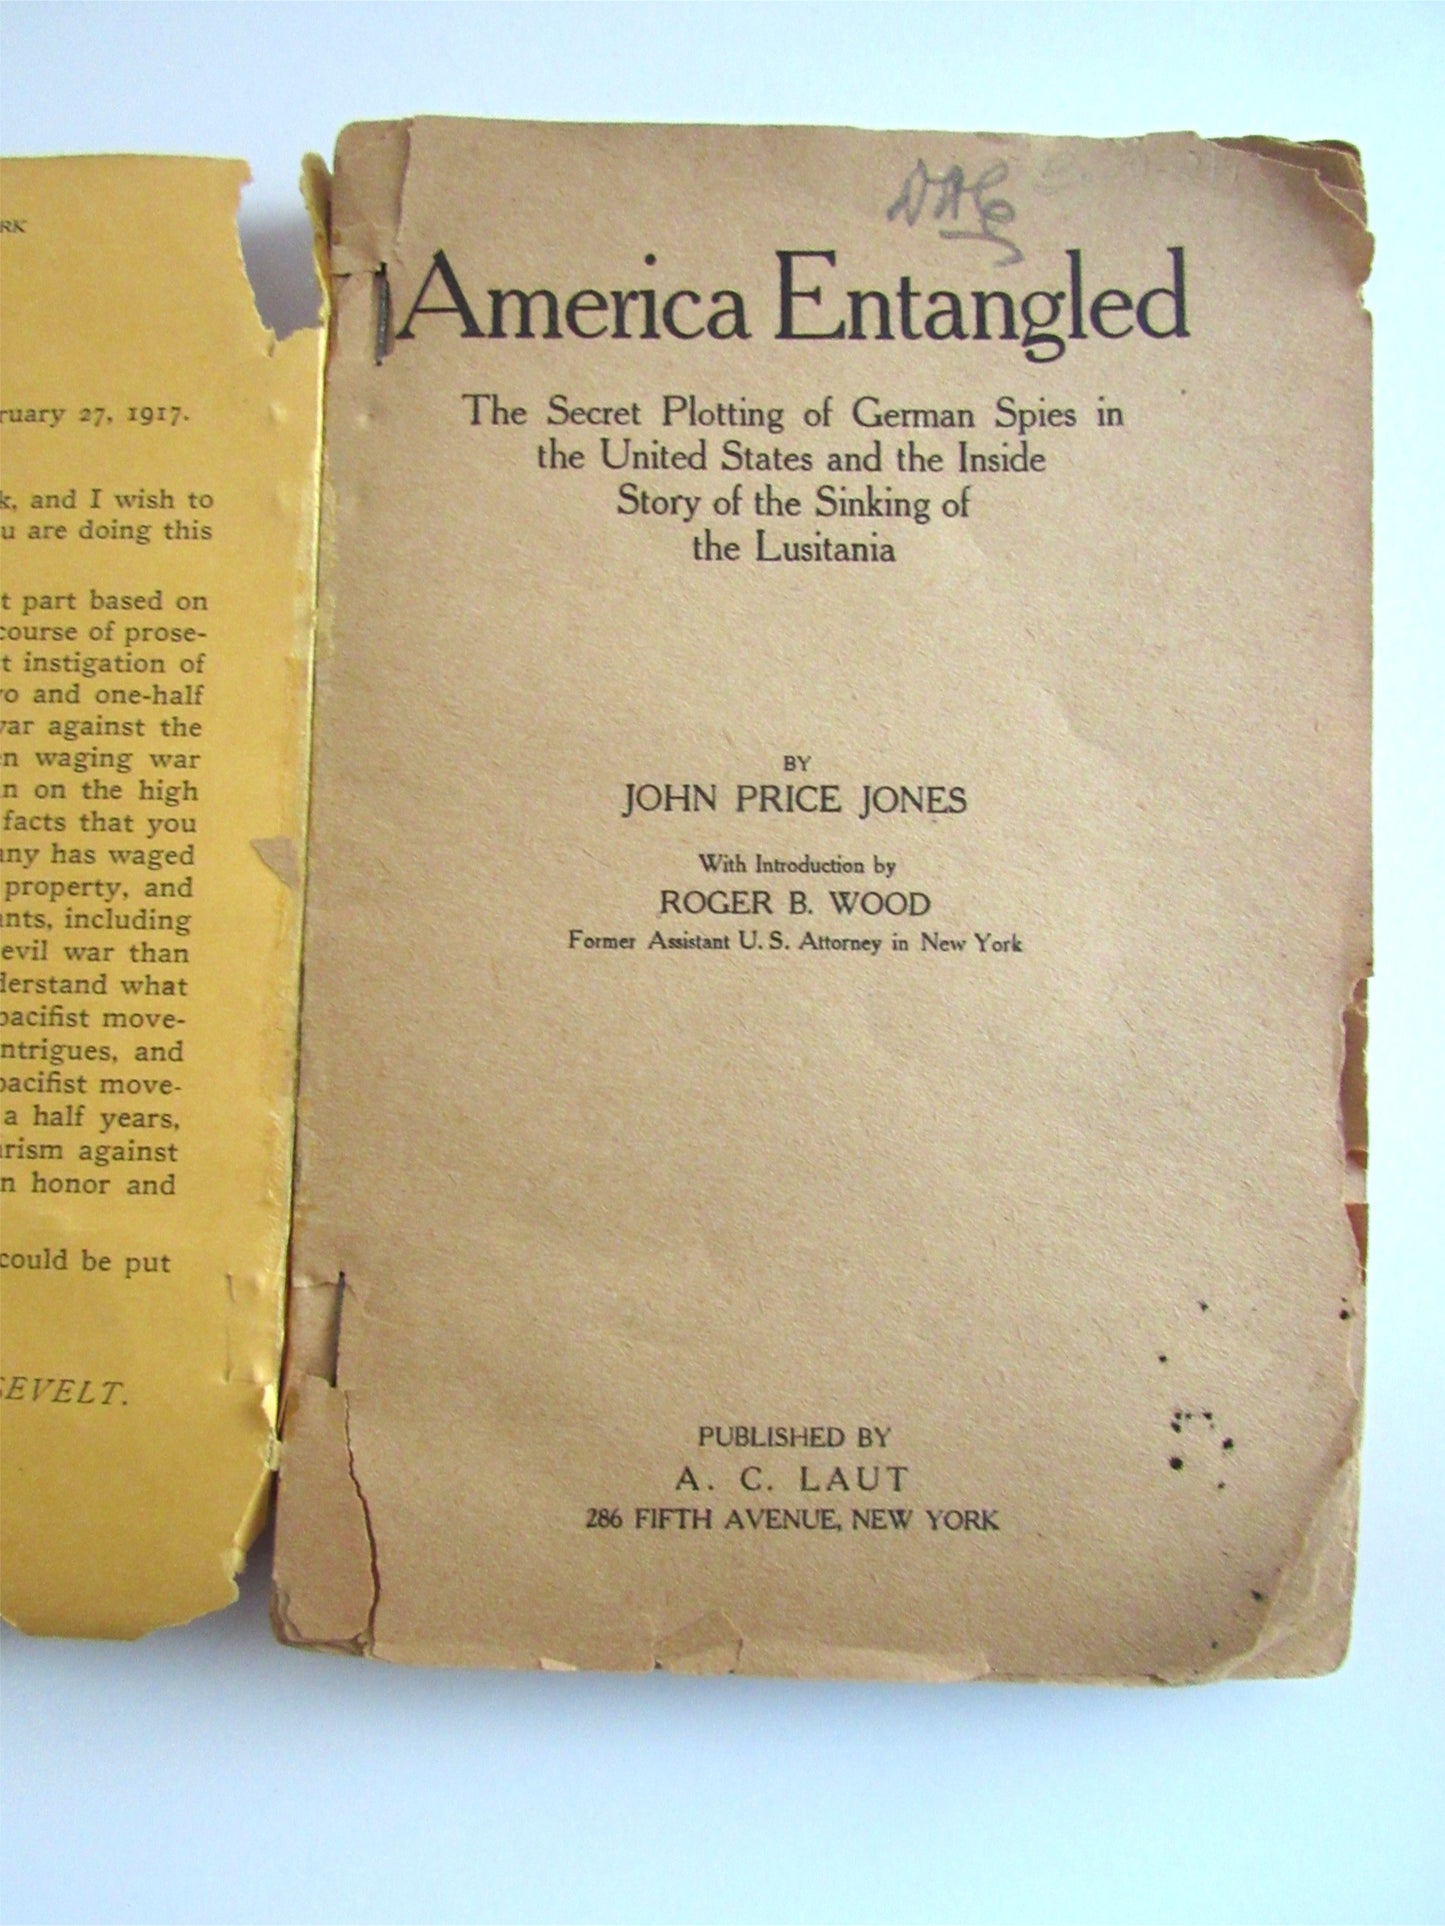 RARE Antique 1917 "America Entangled" by John Price Jones WWI German Spies Book